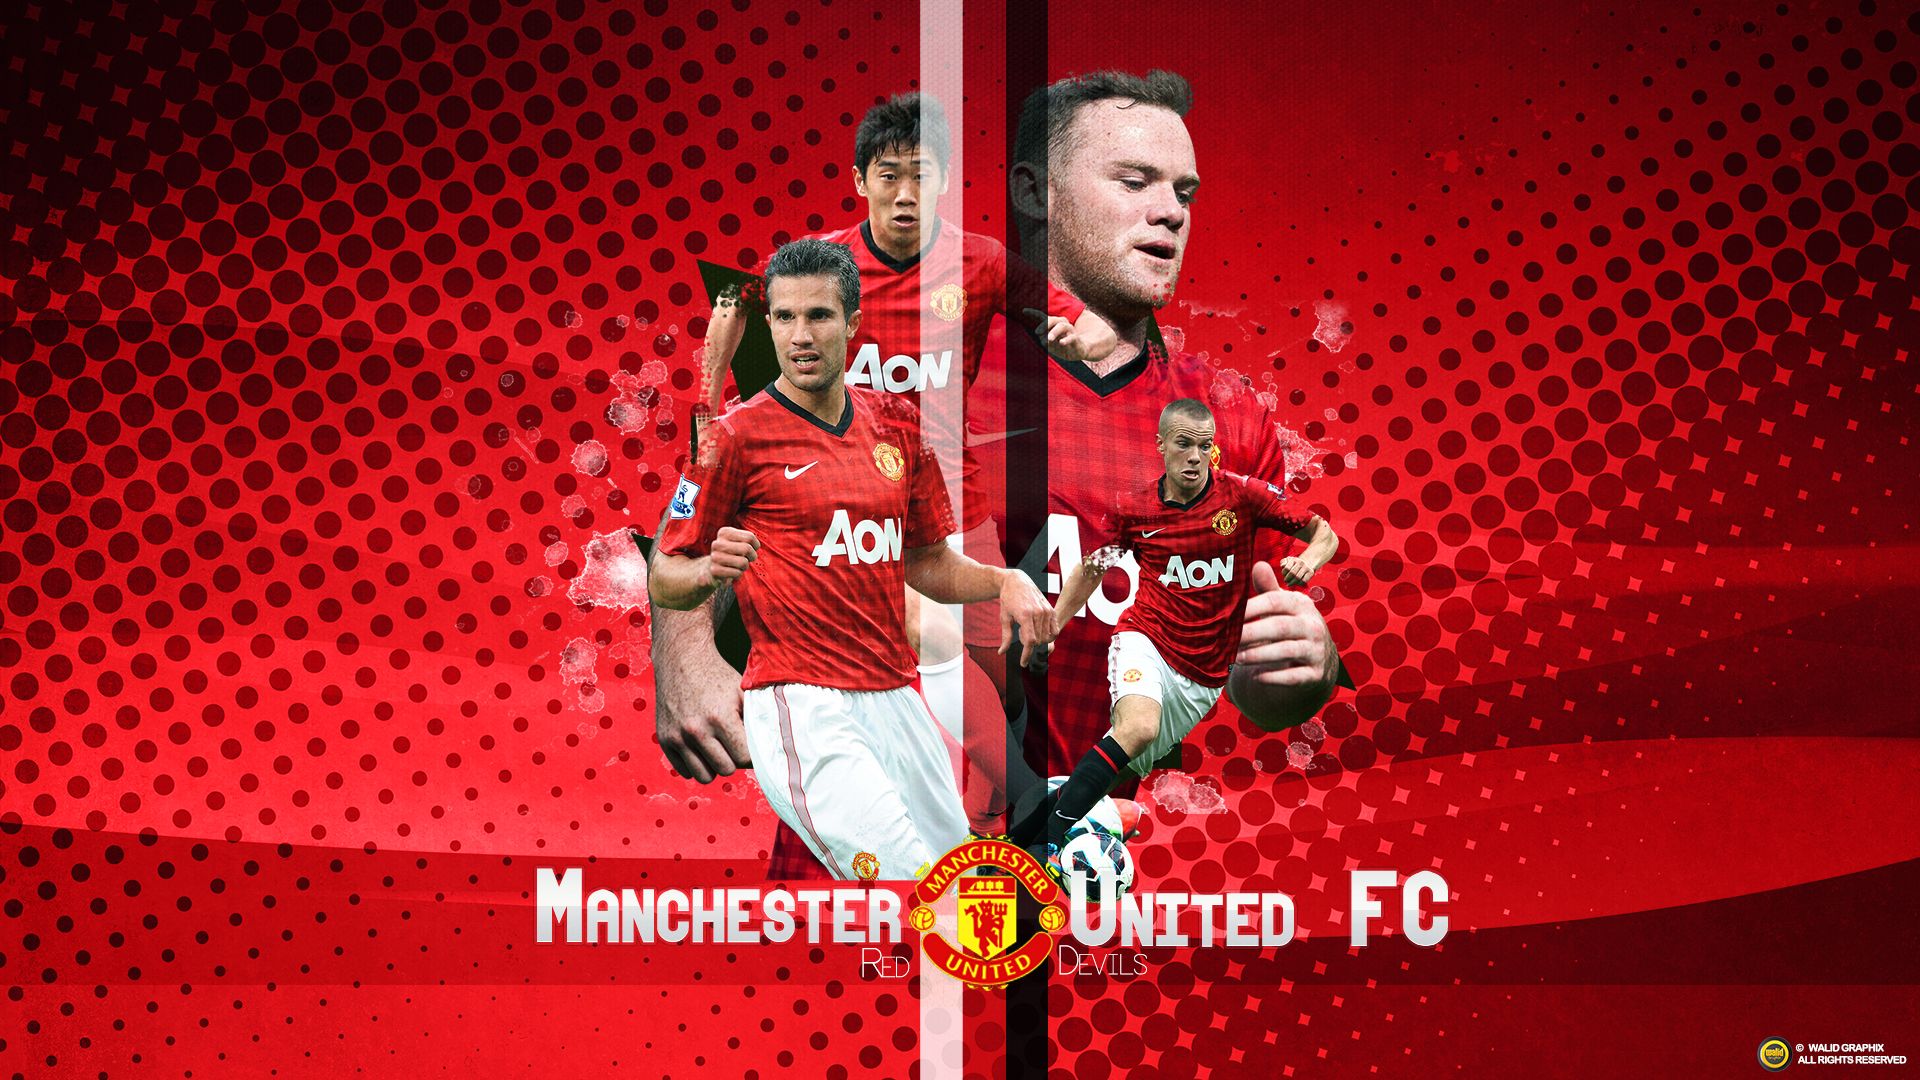 HD wallpaper, United, Manchester, Fc, Wallpaper, Hd